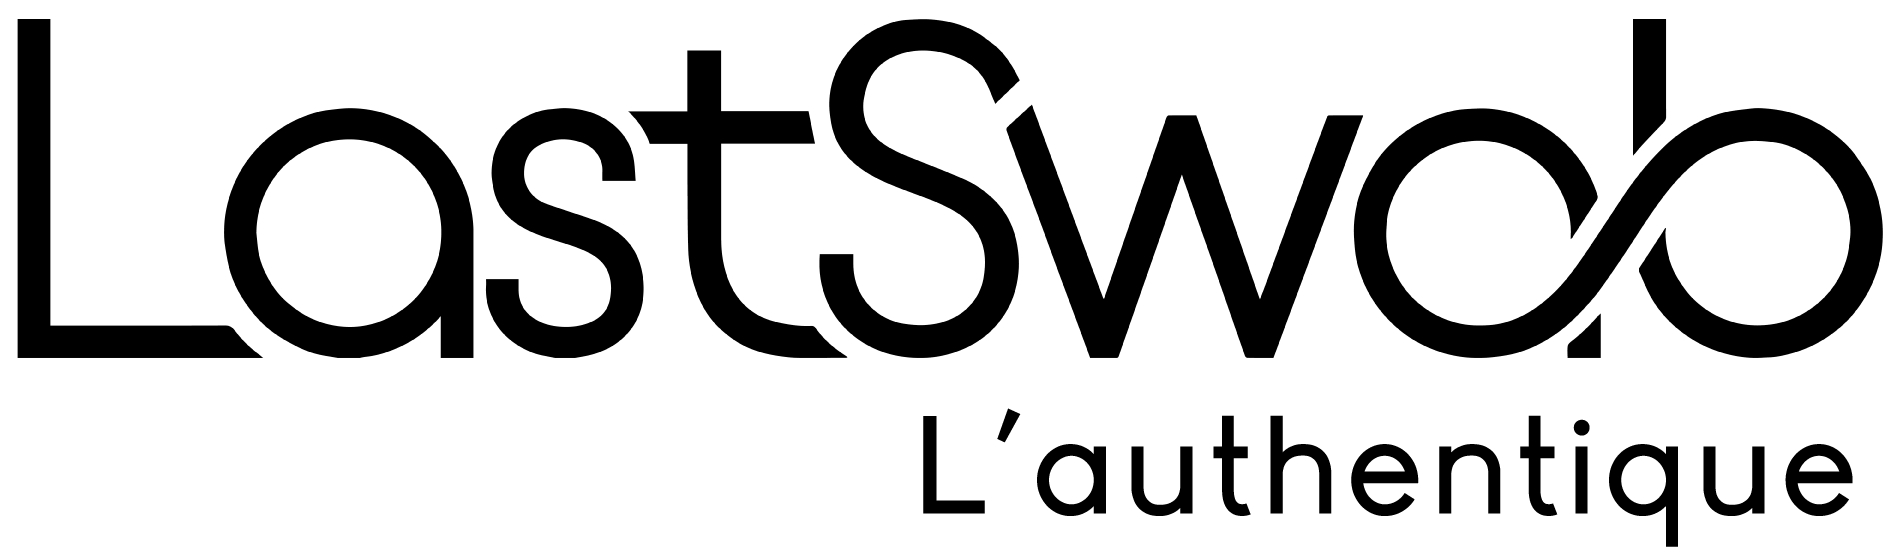 Productos Lastswab